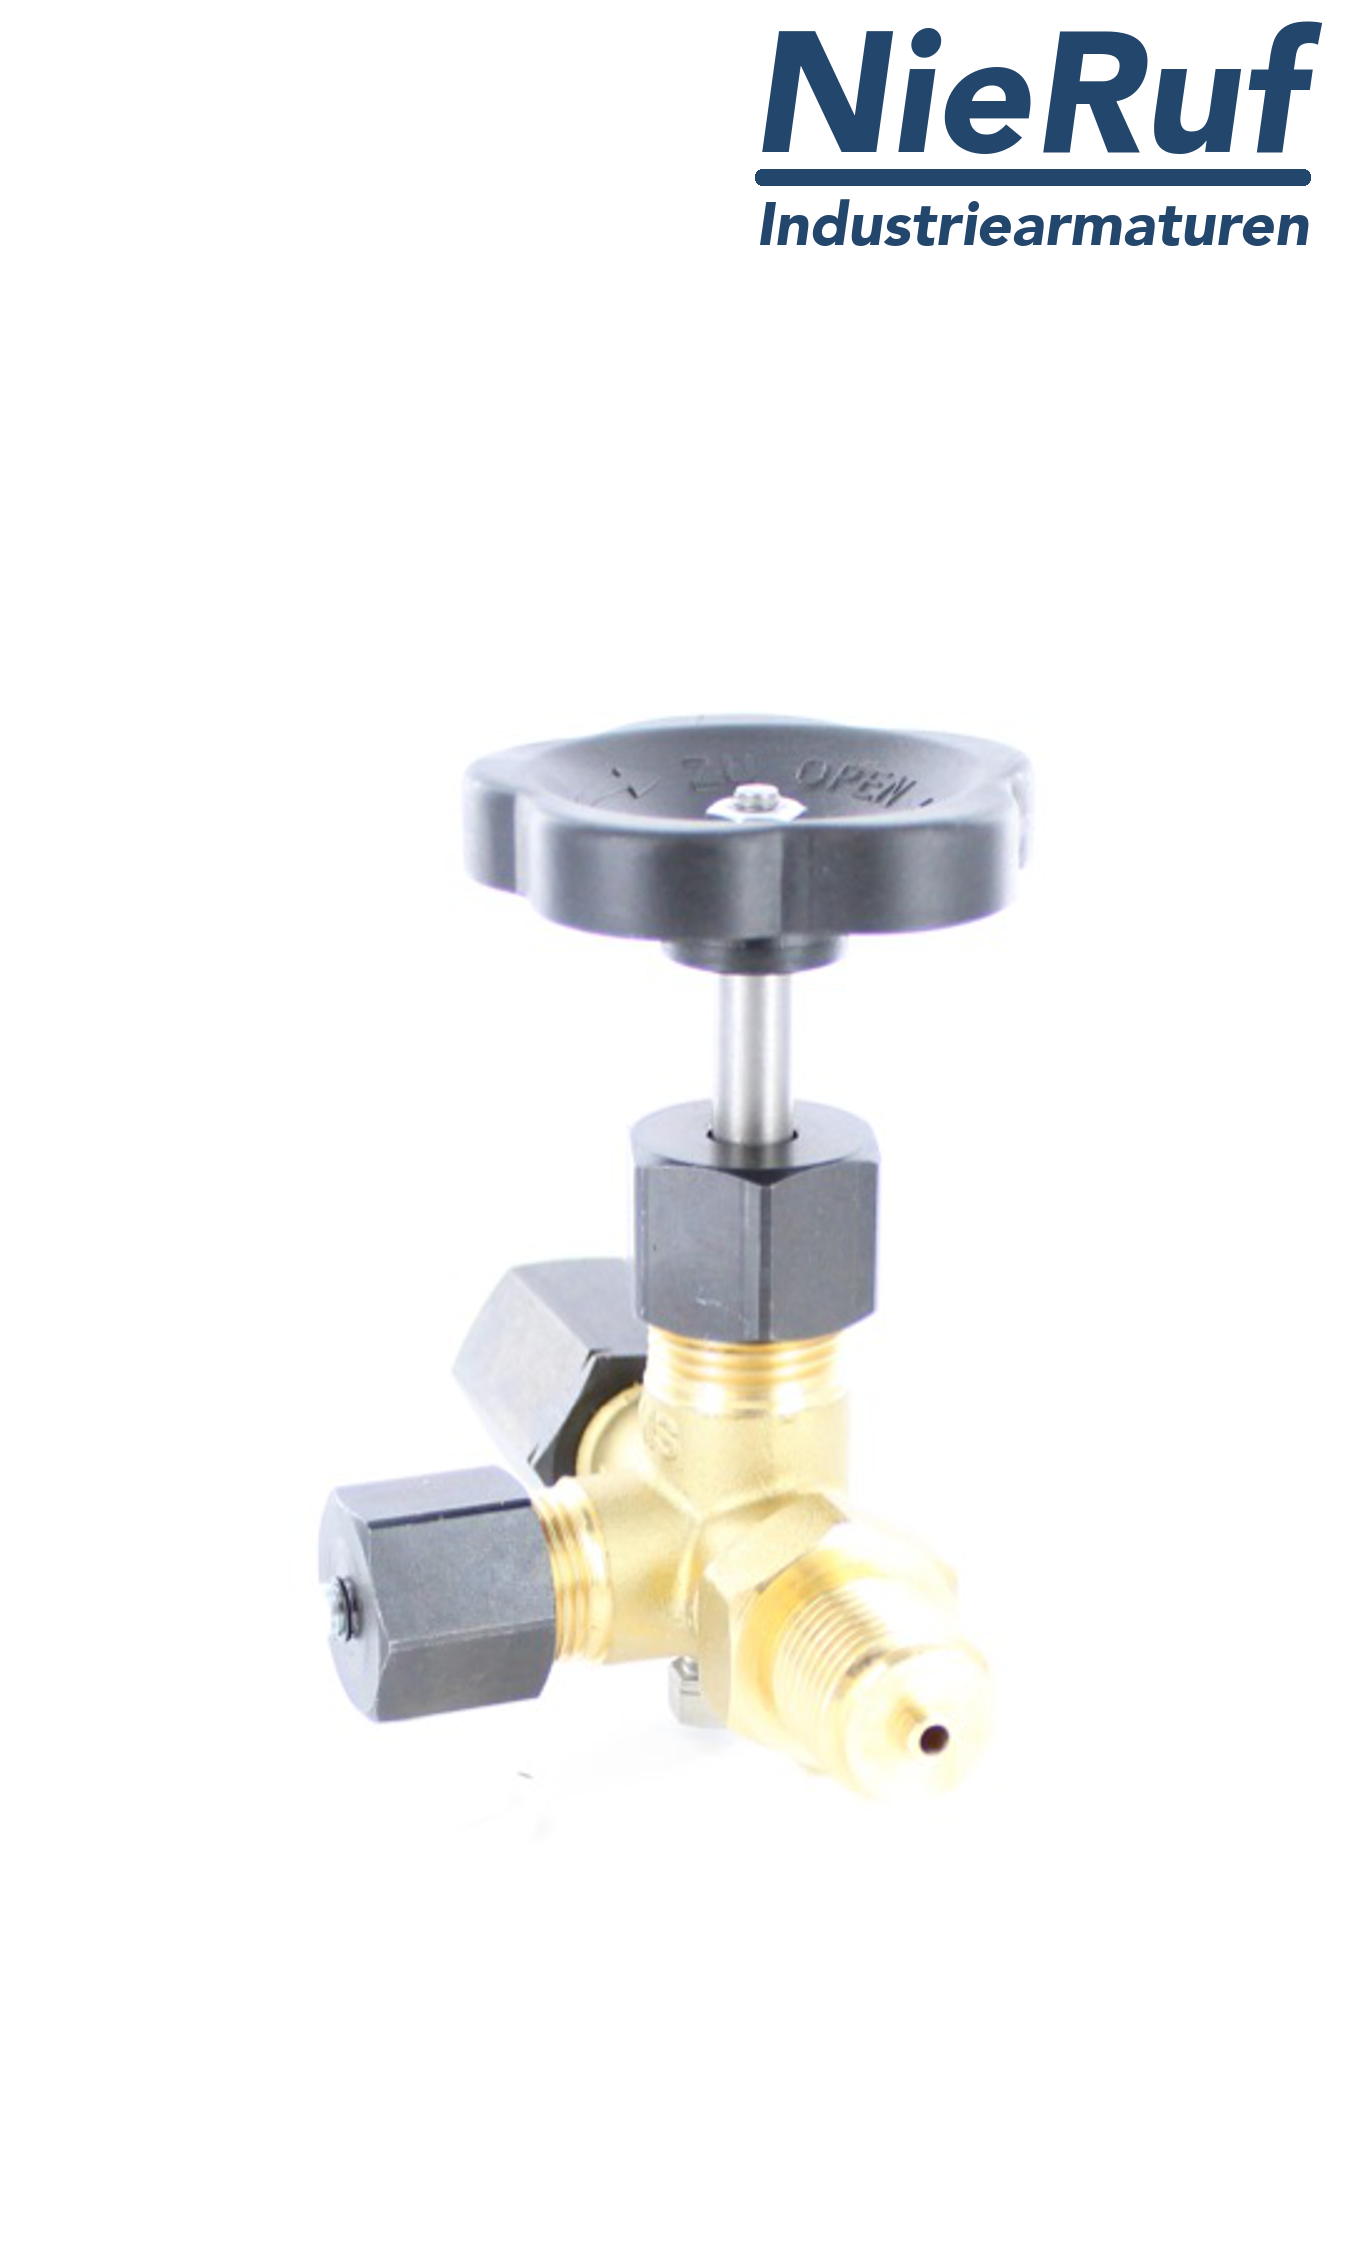 manometer gauge valves male thread x sleeve x test connector M20x1,5 DIN 16271 brass 250 bar